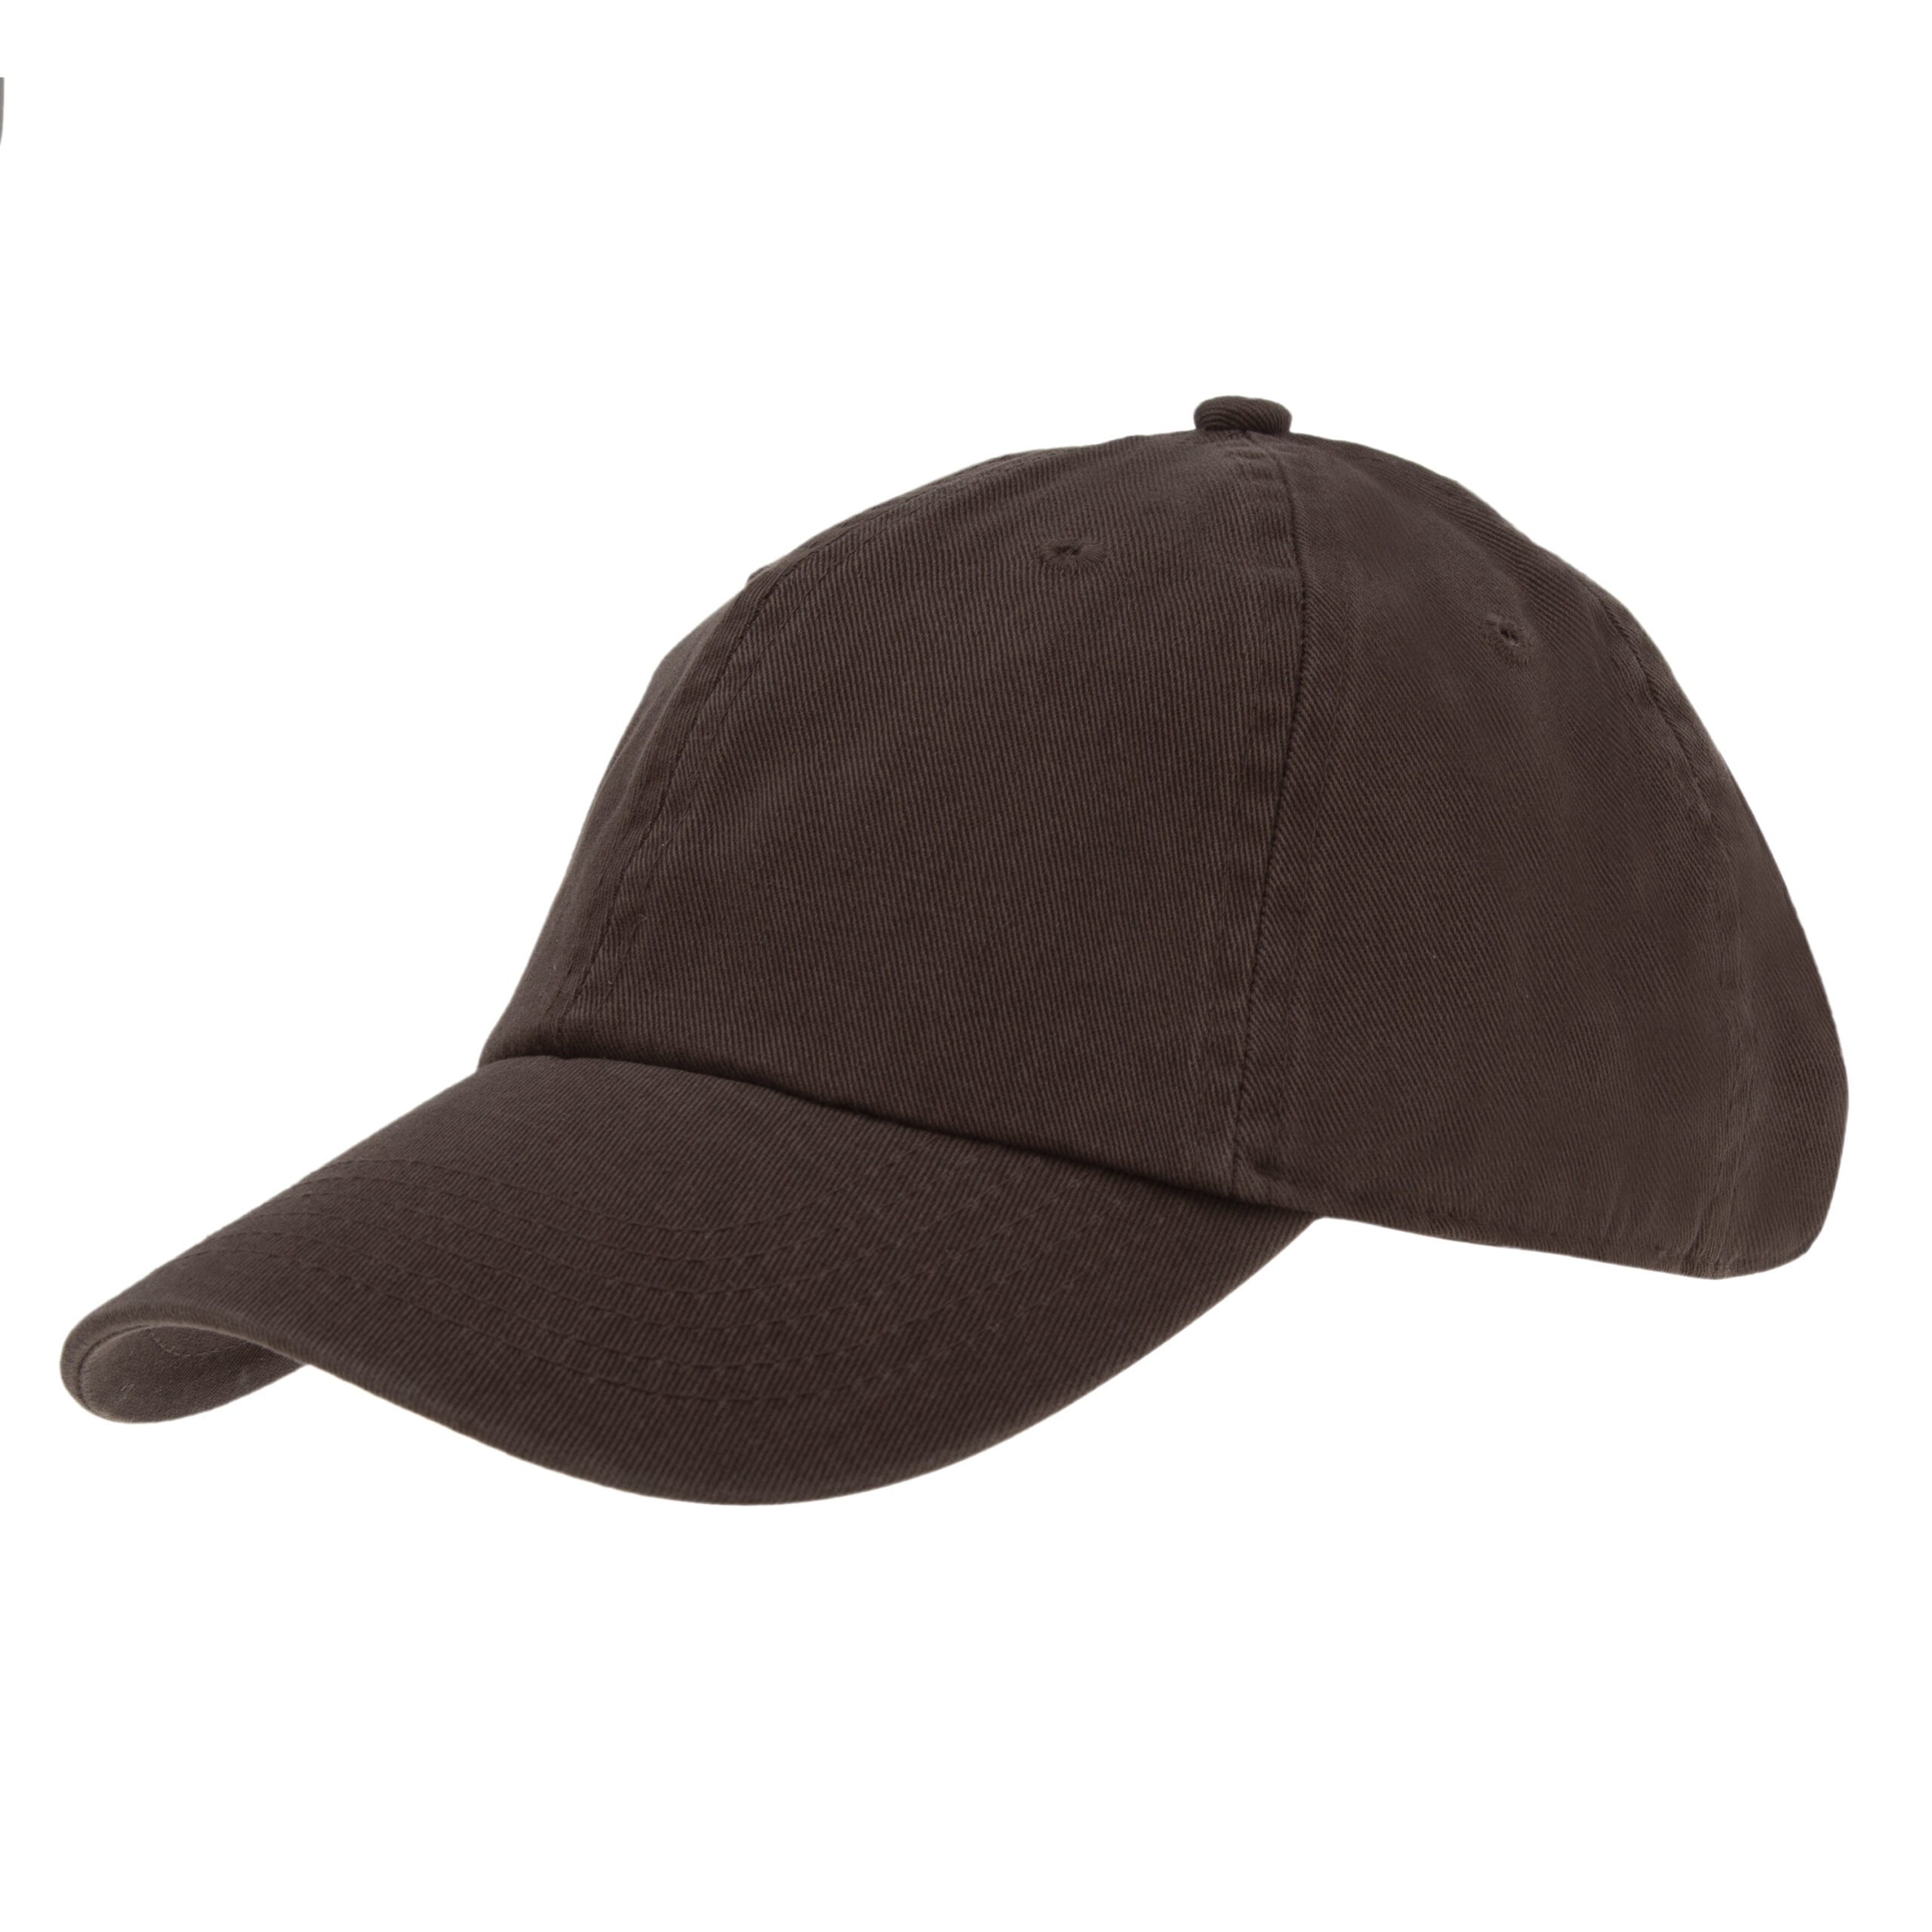 12pcs Dark Brown Plain Baseball Caps Low Profile - Unconstructed - Adjustable Clasp - 100% Cotton - Stone Washed - Bulk by the Dozen - Wholesale